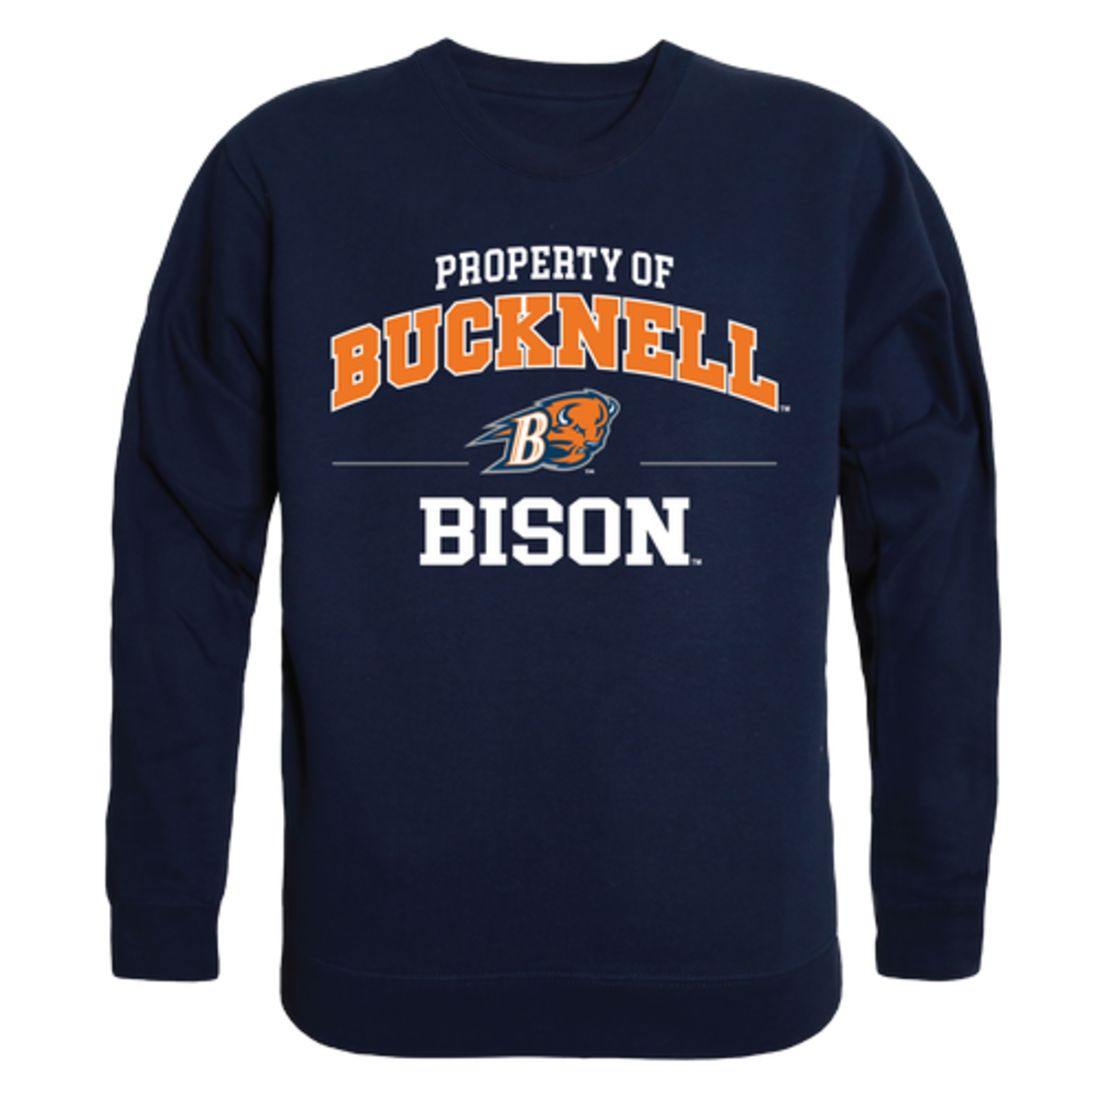 Bucknell University Bison Property Crewneck Pullover Sweatshirt Sweater Navy-Campus-Wardrobe